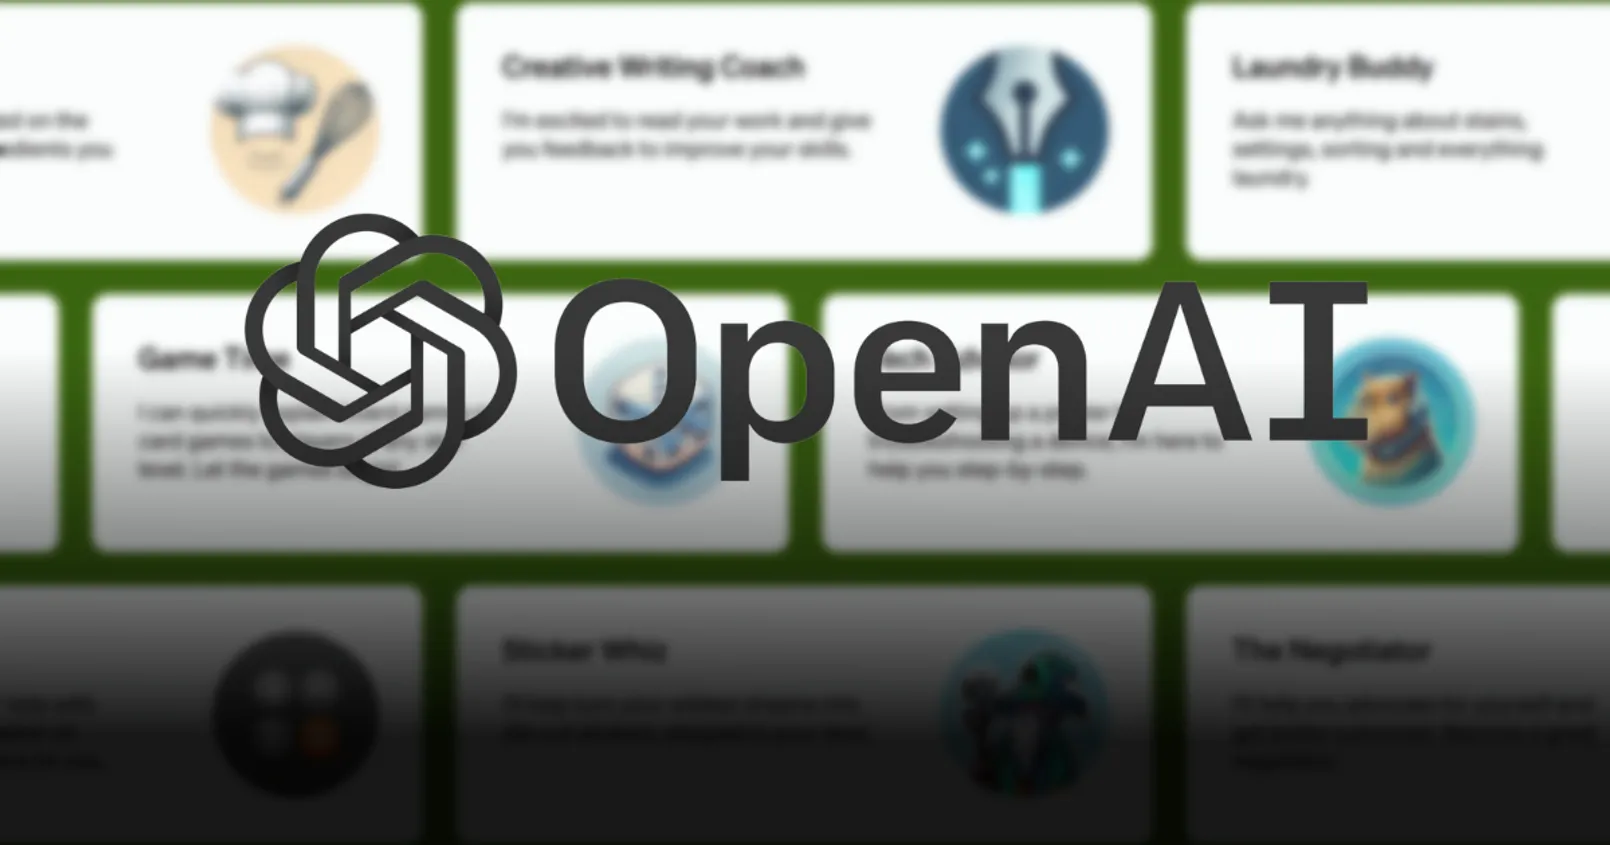 OpenAI เปิดตัว GPTs! ฟีเจอร์ใหม่ ที่ให้ผู้ใช้งานสร้าง ‘แชตบอท’ ของตนเองได้ตามที่ต้องการ